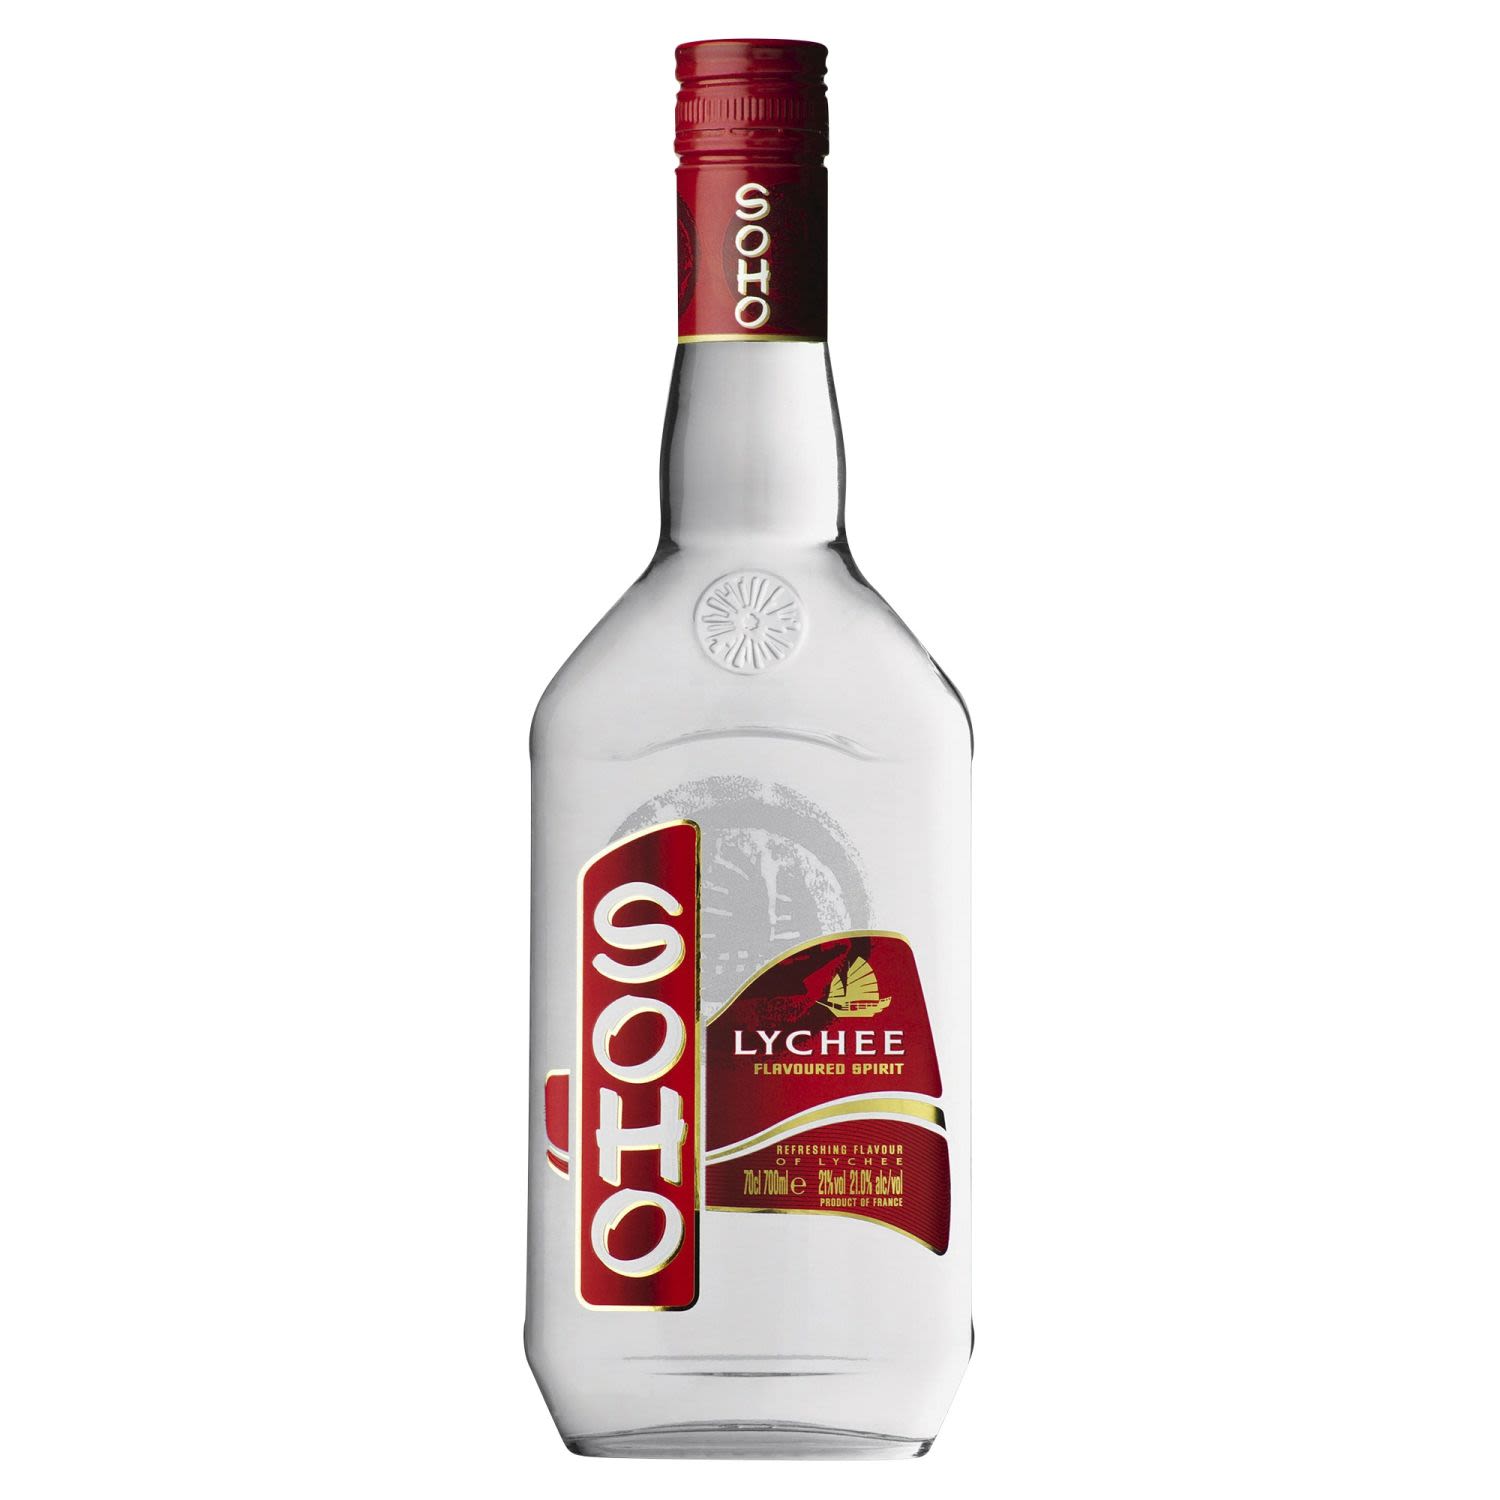 Soho Lychee Flavoured Spirit 700mL Bottle